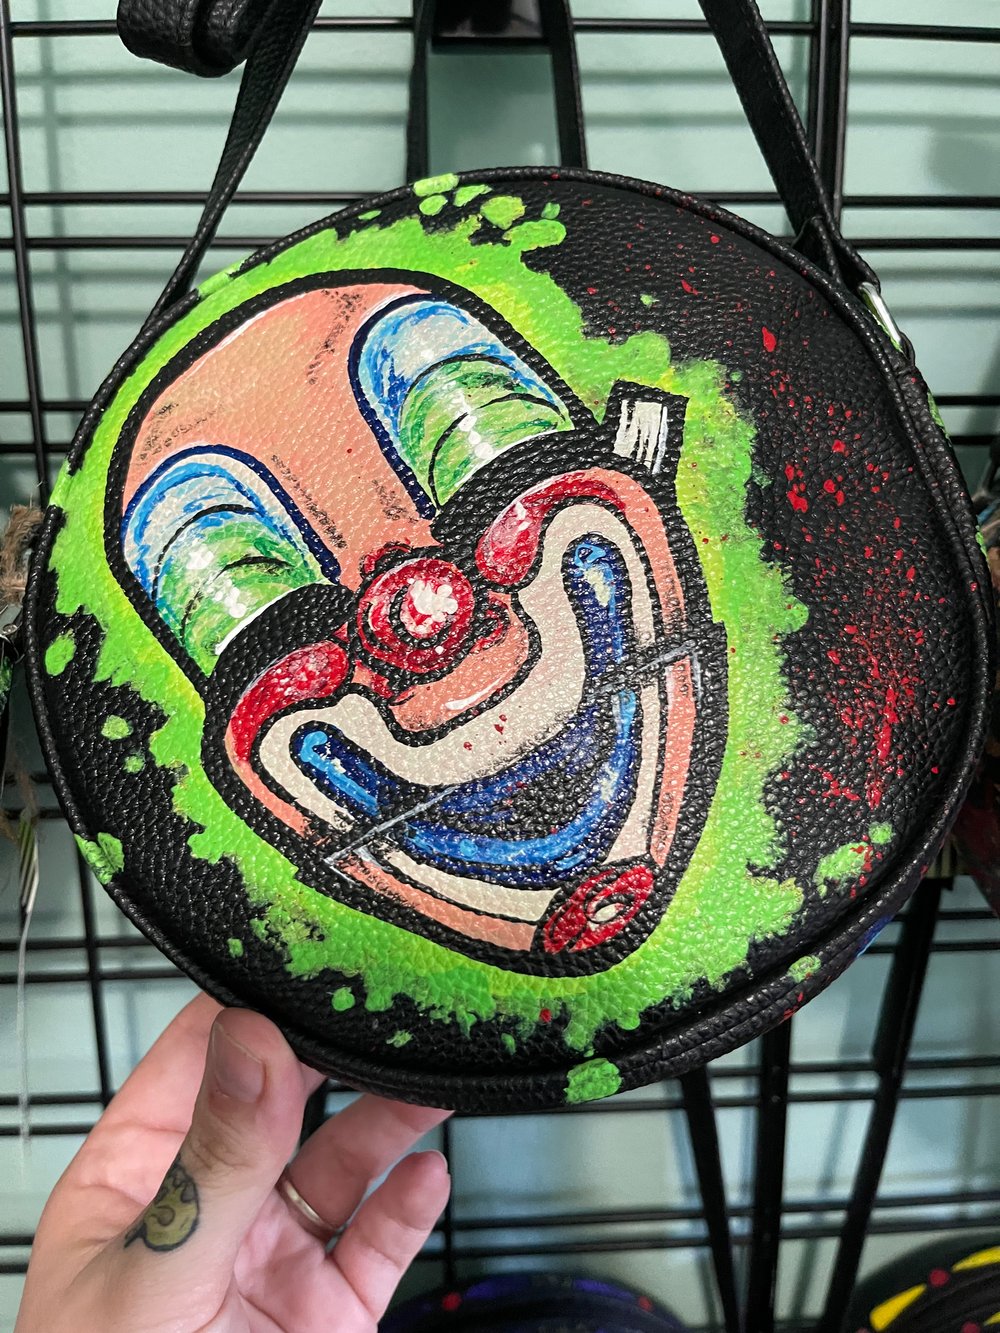 Little Brother Clown Mask '78 Bag - Halloween Inspired